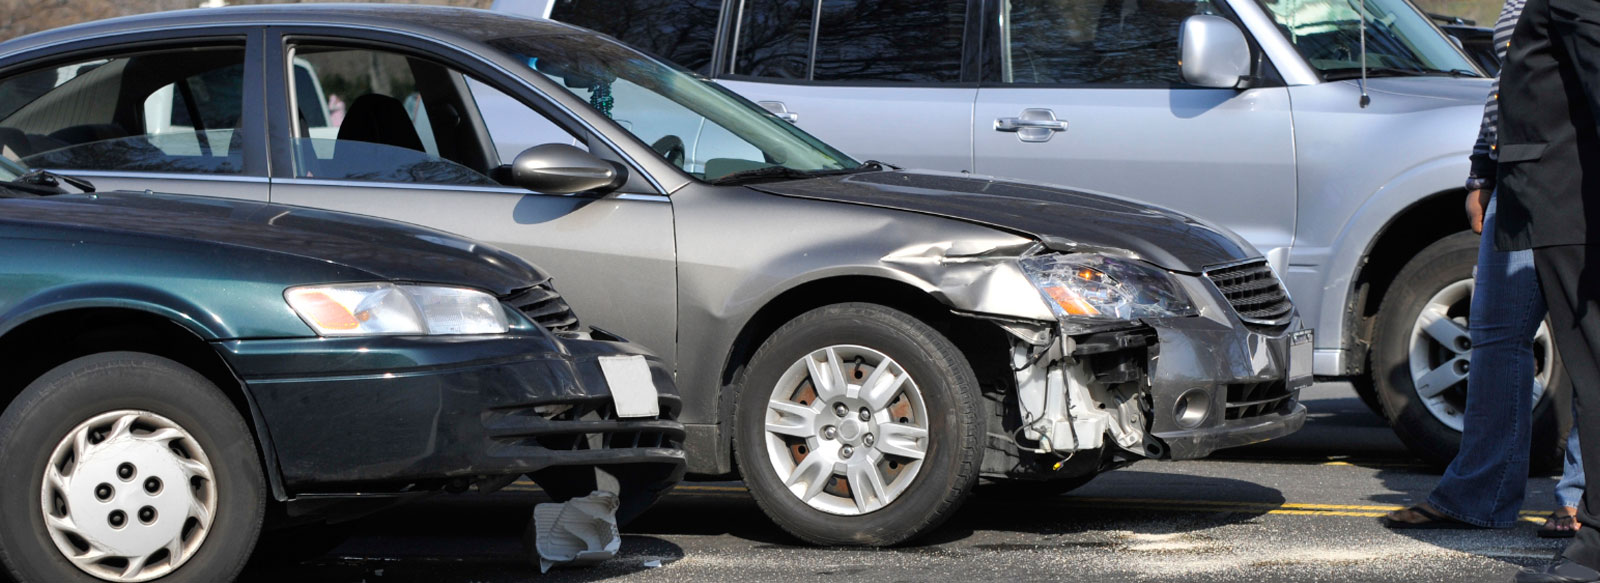 auto-insurance-claims-boston.jpg